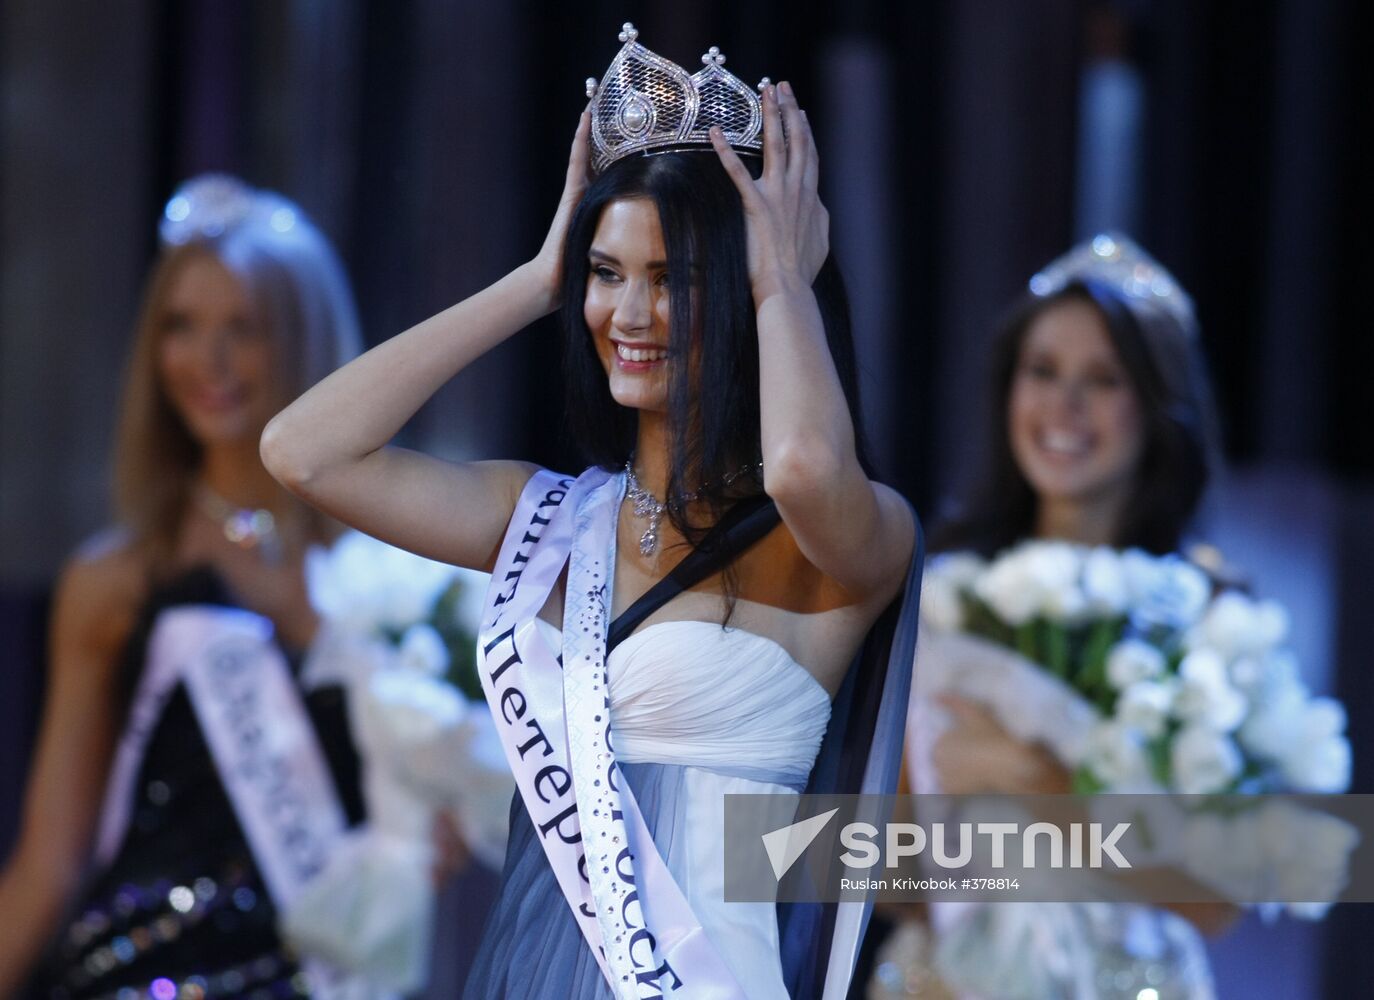 Sofia Rudyeva from St. Petersburg wins Miss Russia 2009